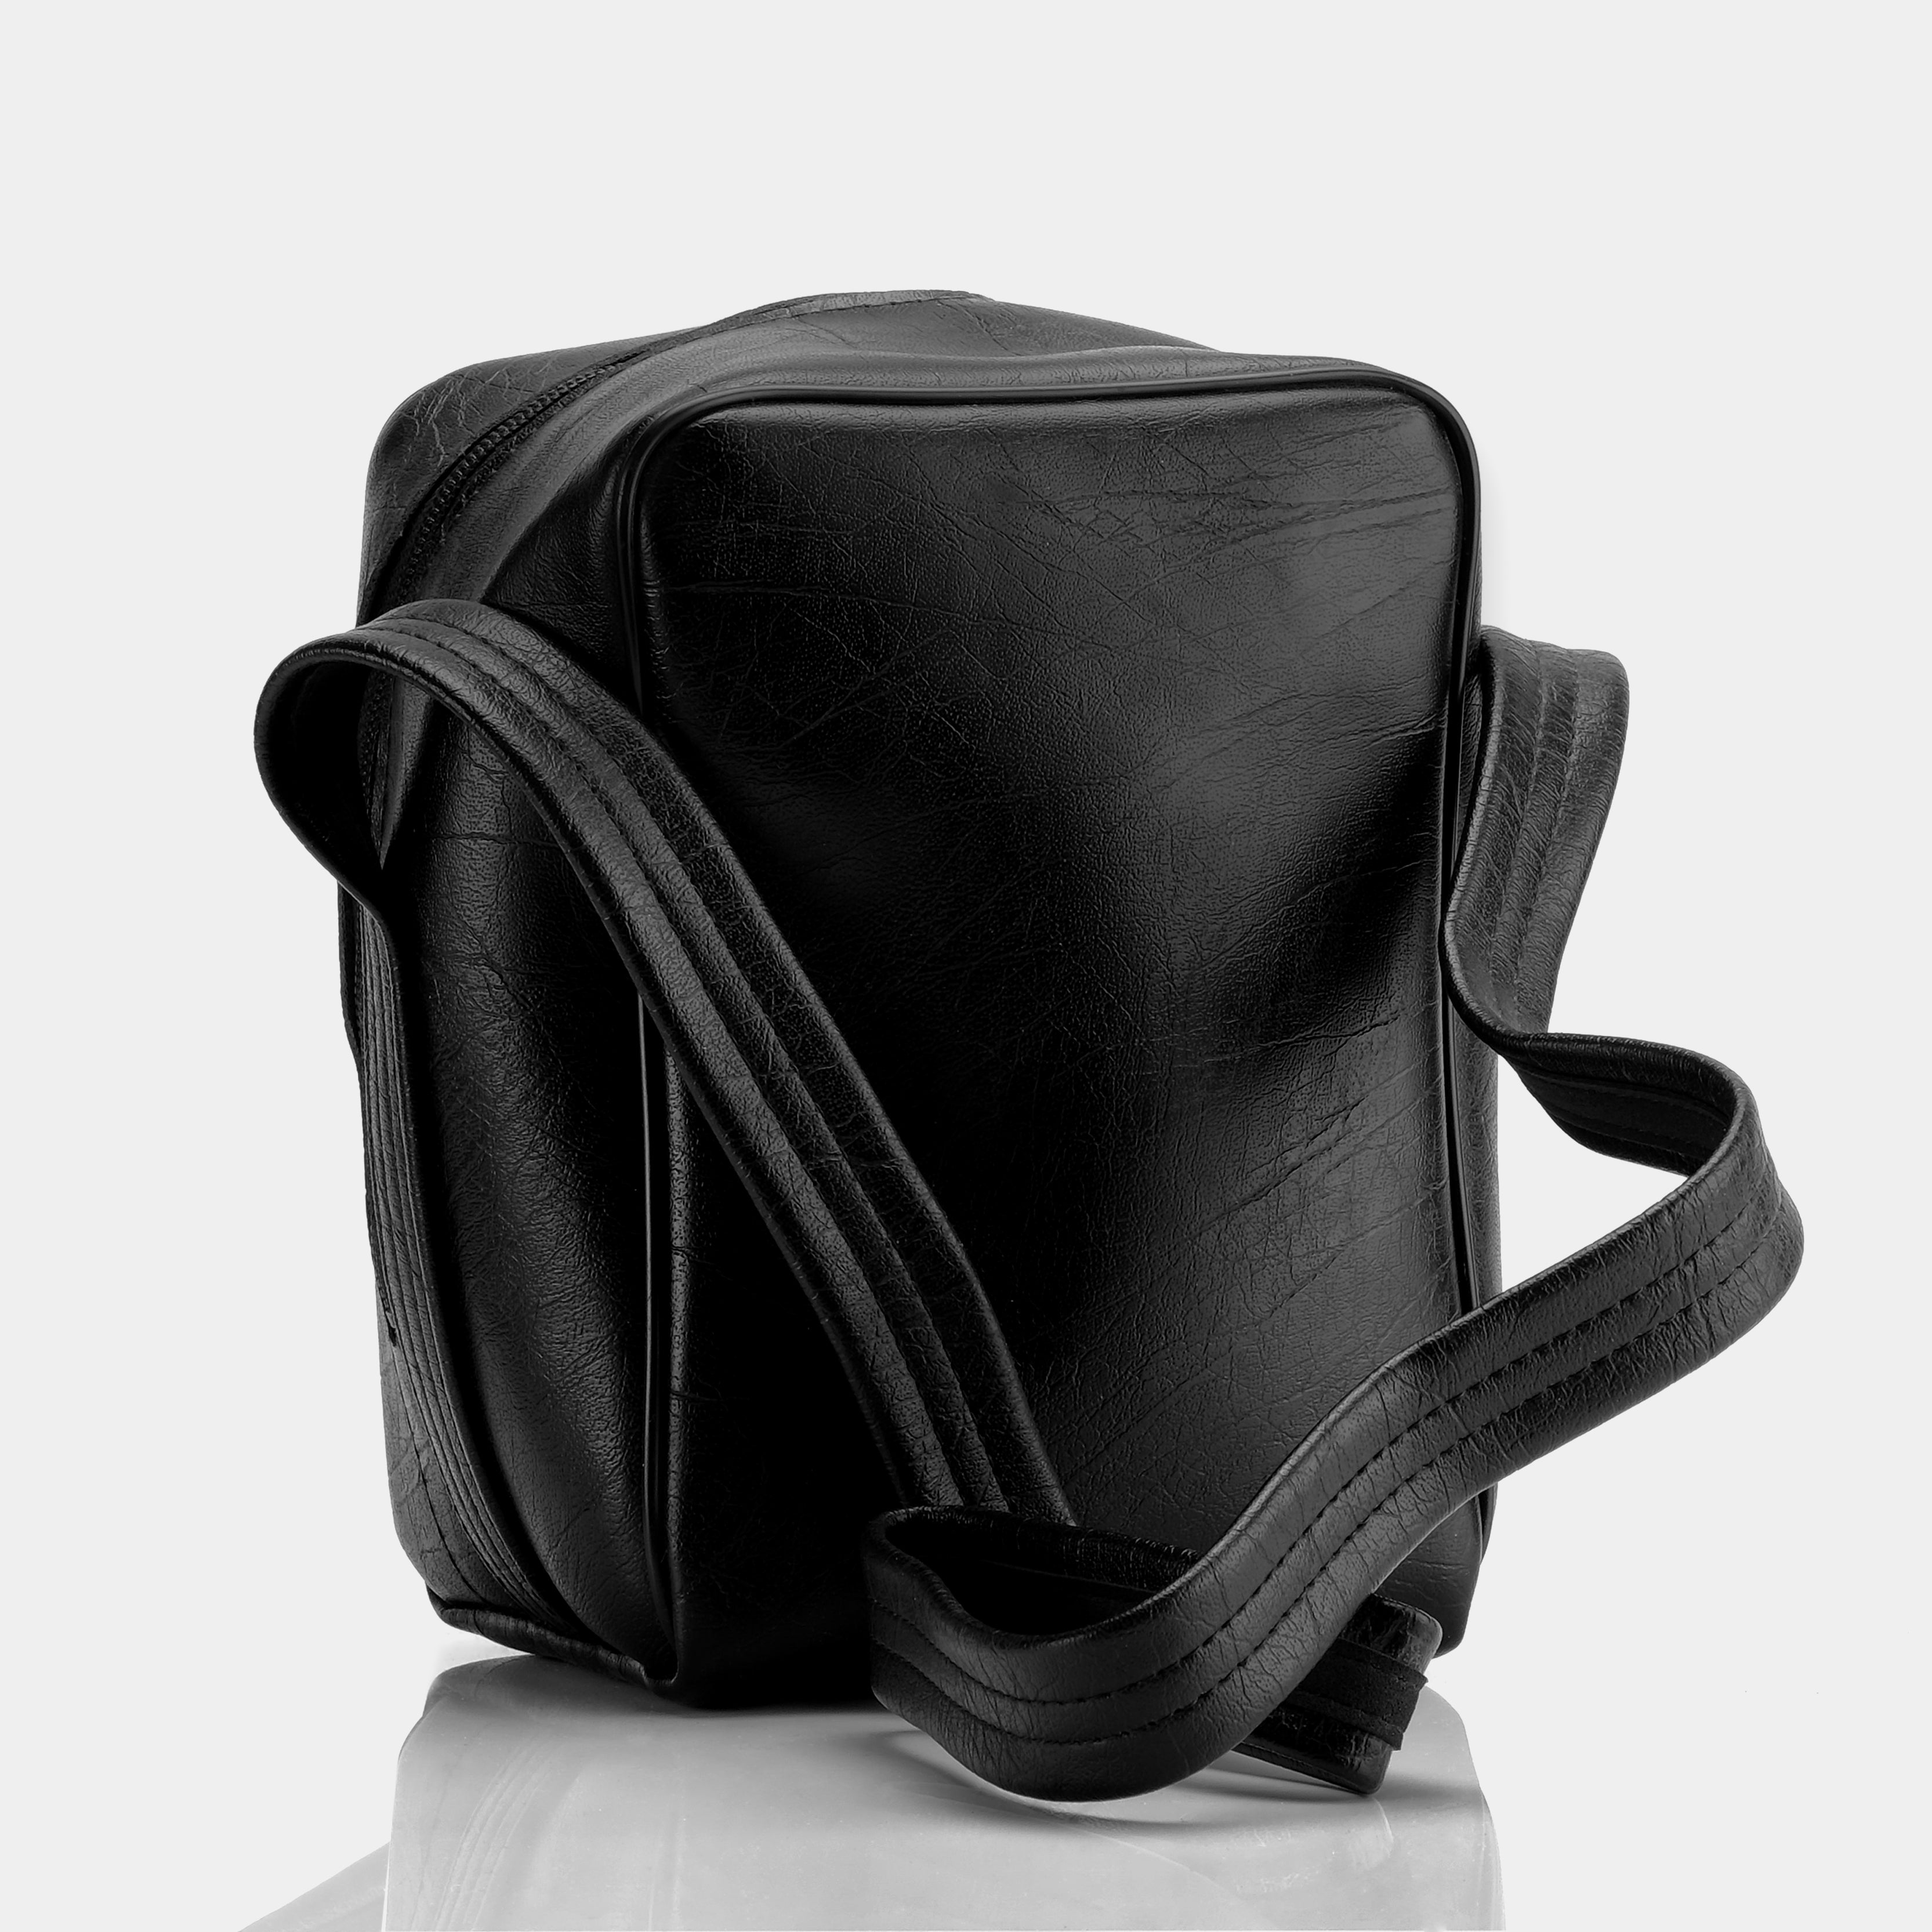 Polaroid Black Pleather Impulse Instant Camera Bag